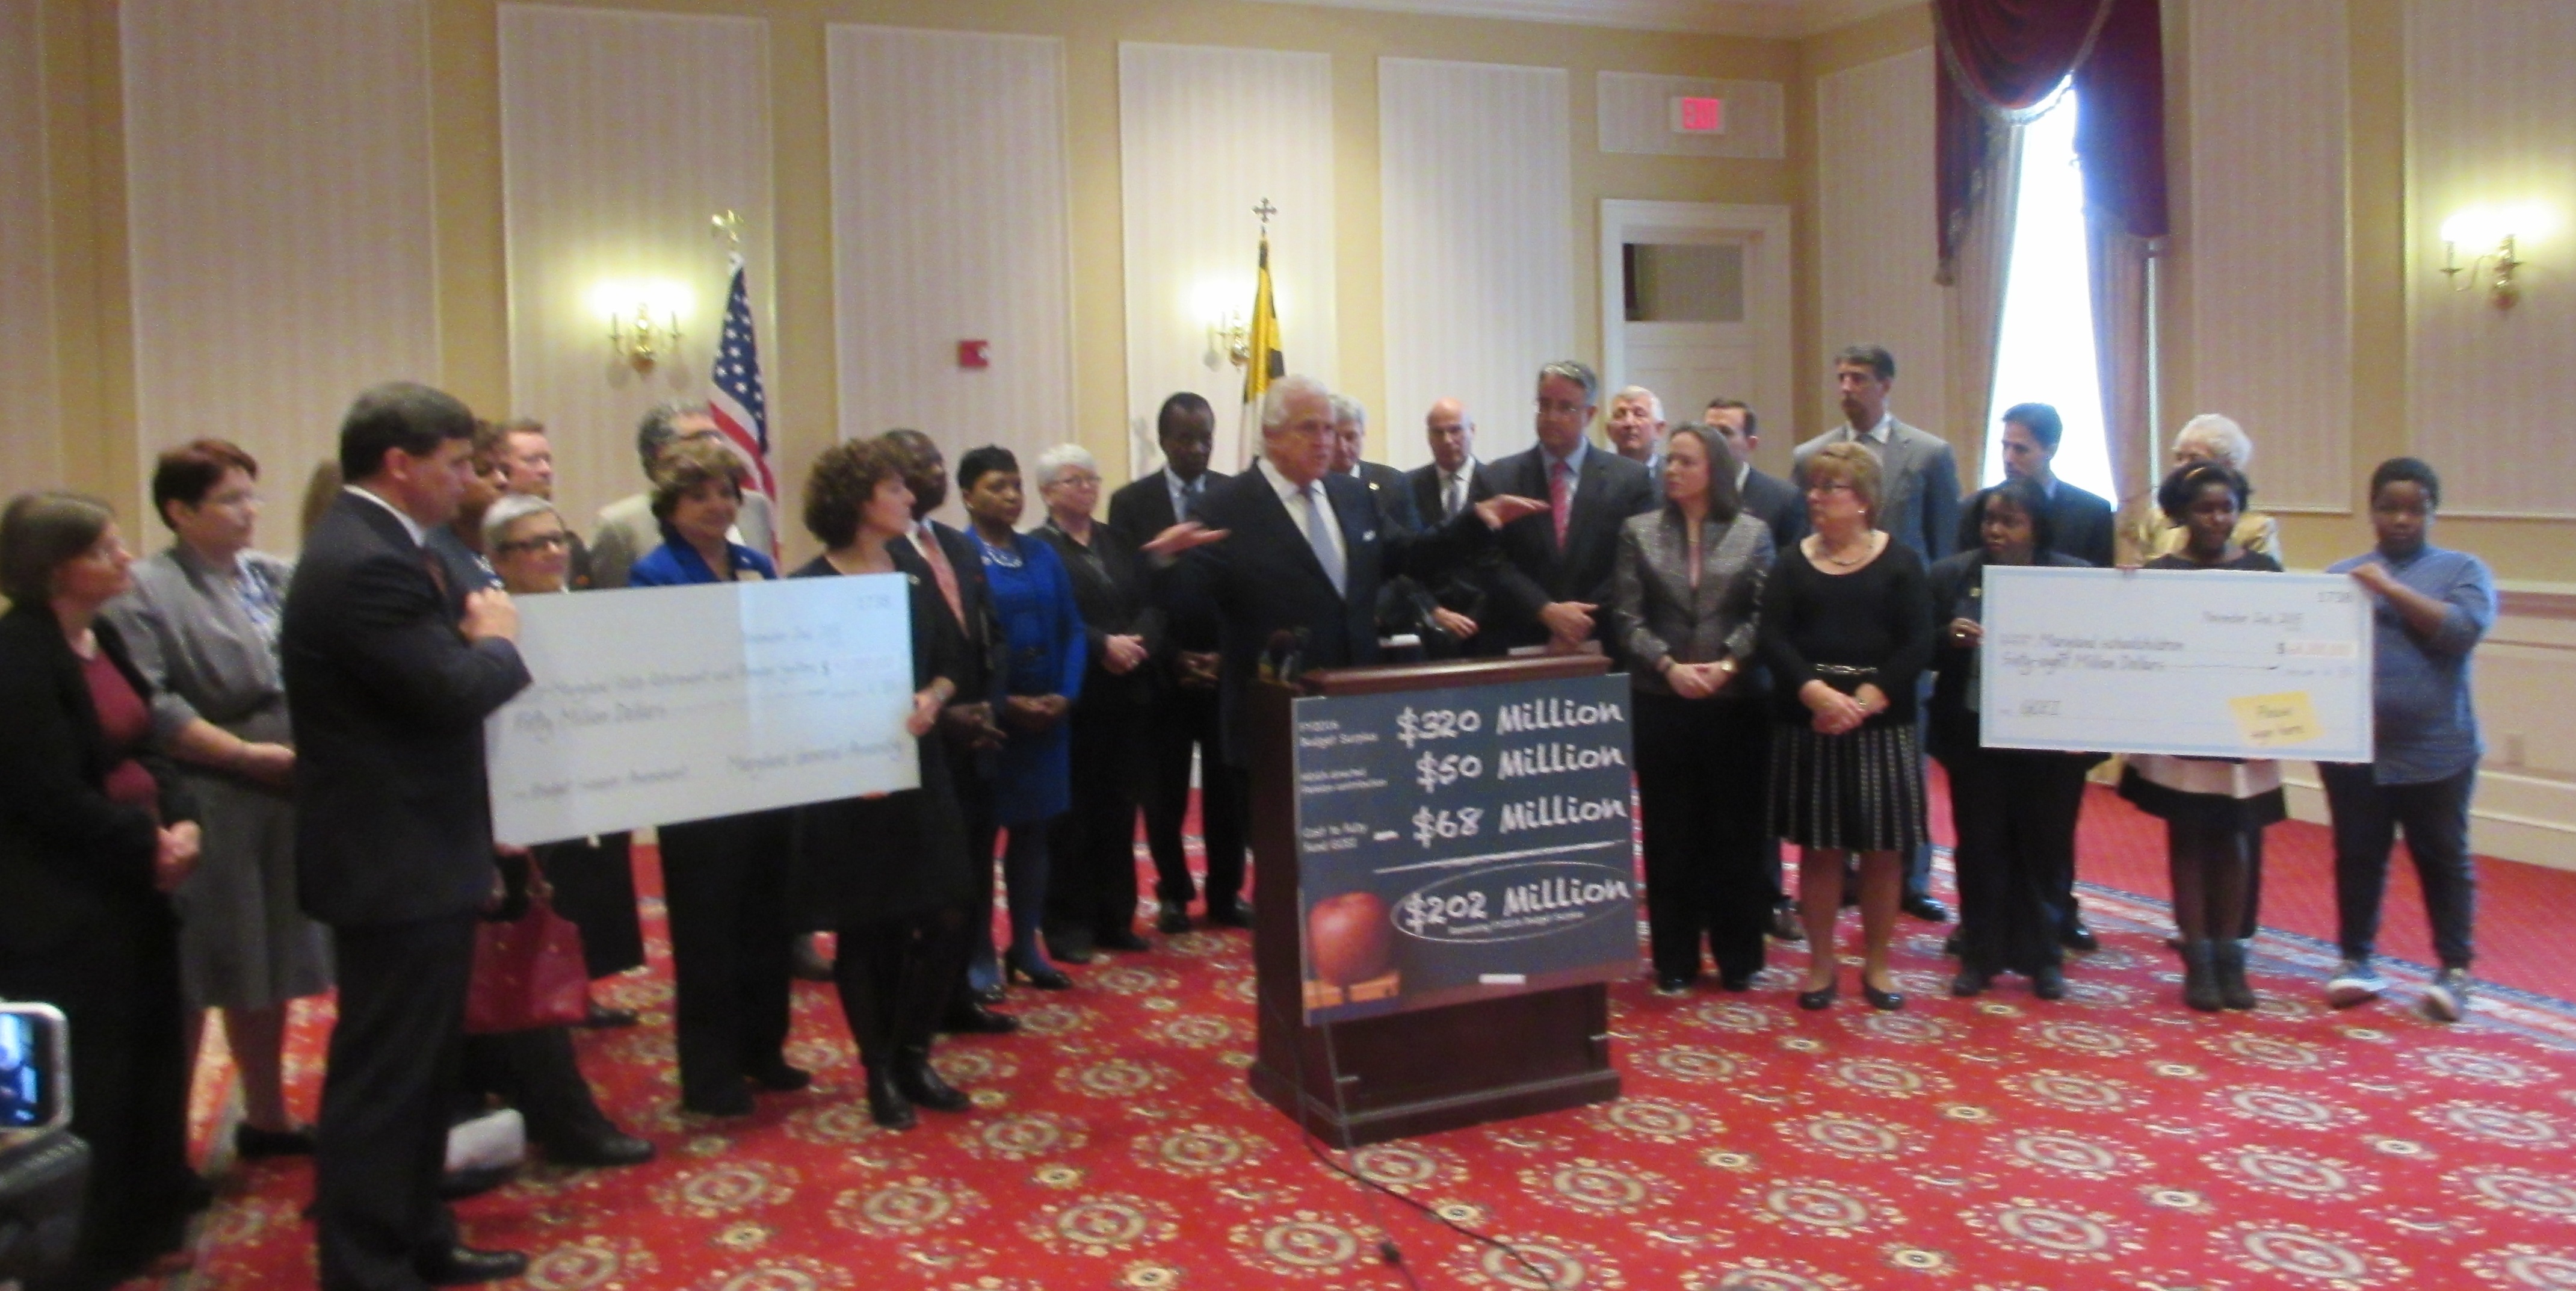 Democrats repeat plea for Hogan to release school aid; governor again says no